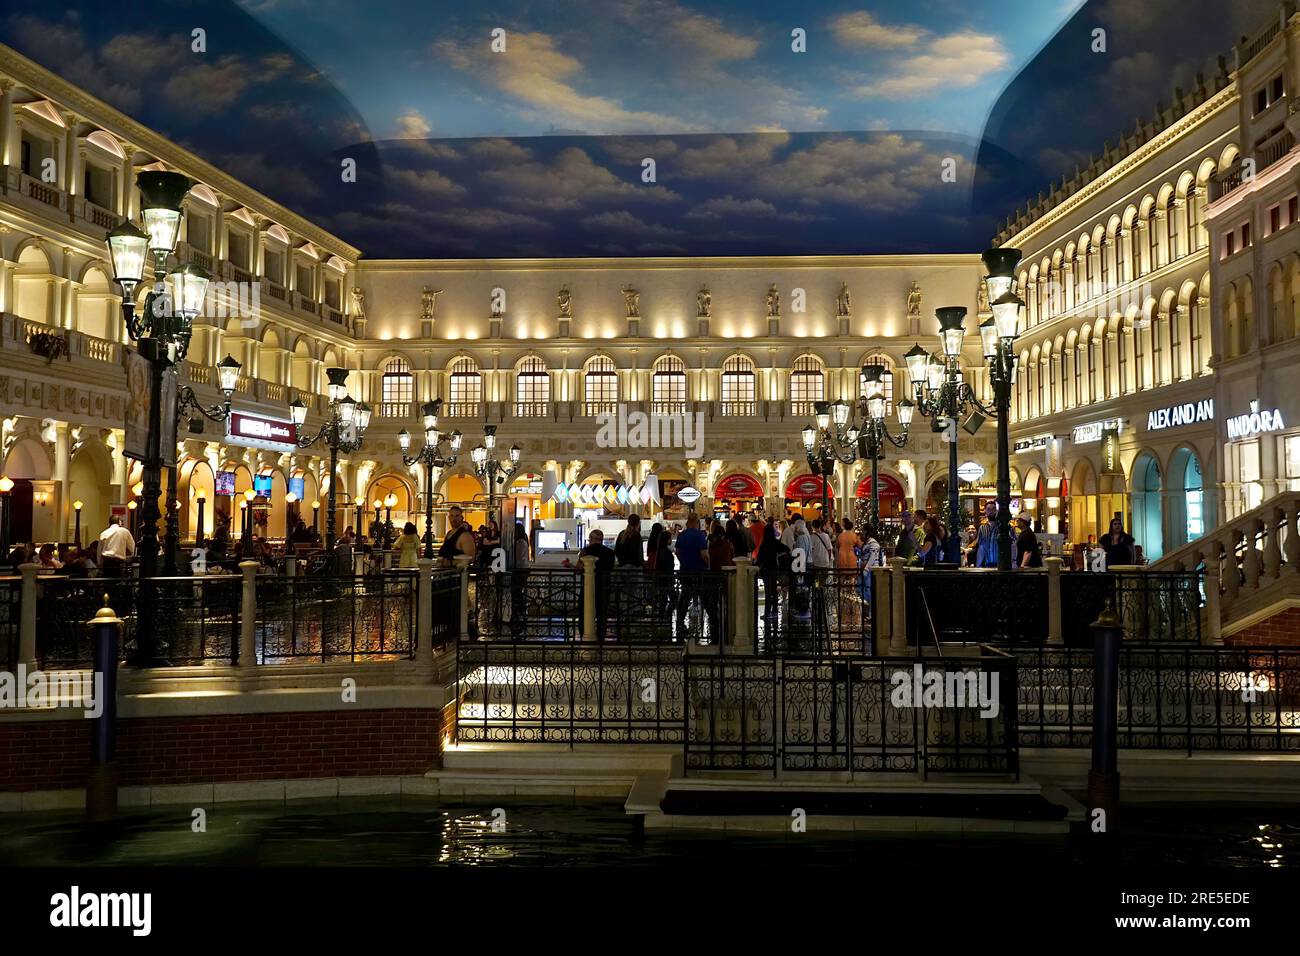 The Venetian Mall in Las Vegas, Nevada Stock Photo - Alamy